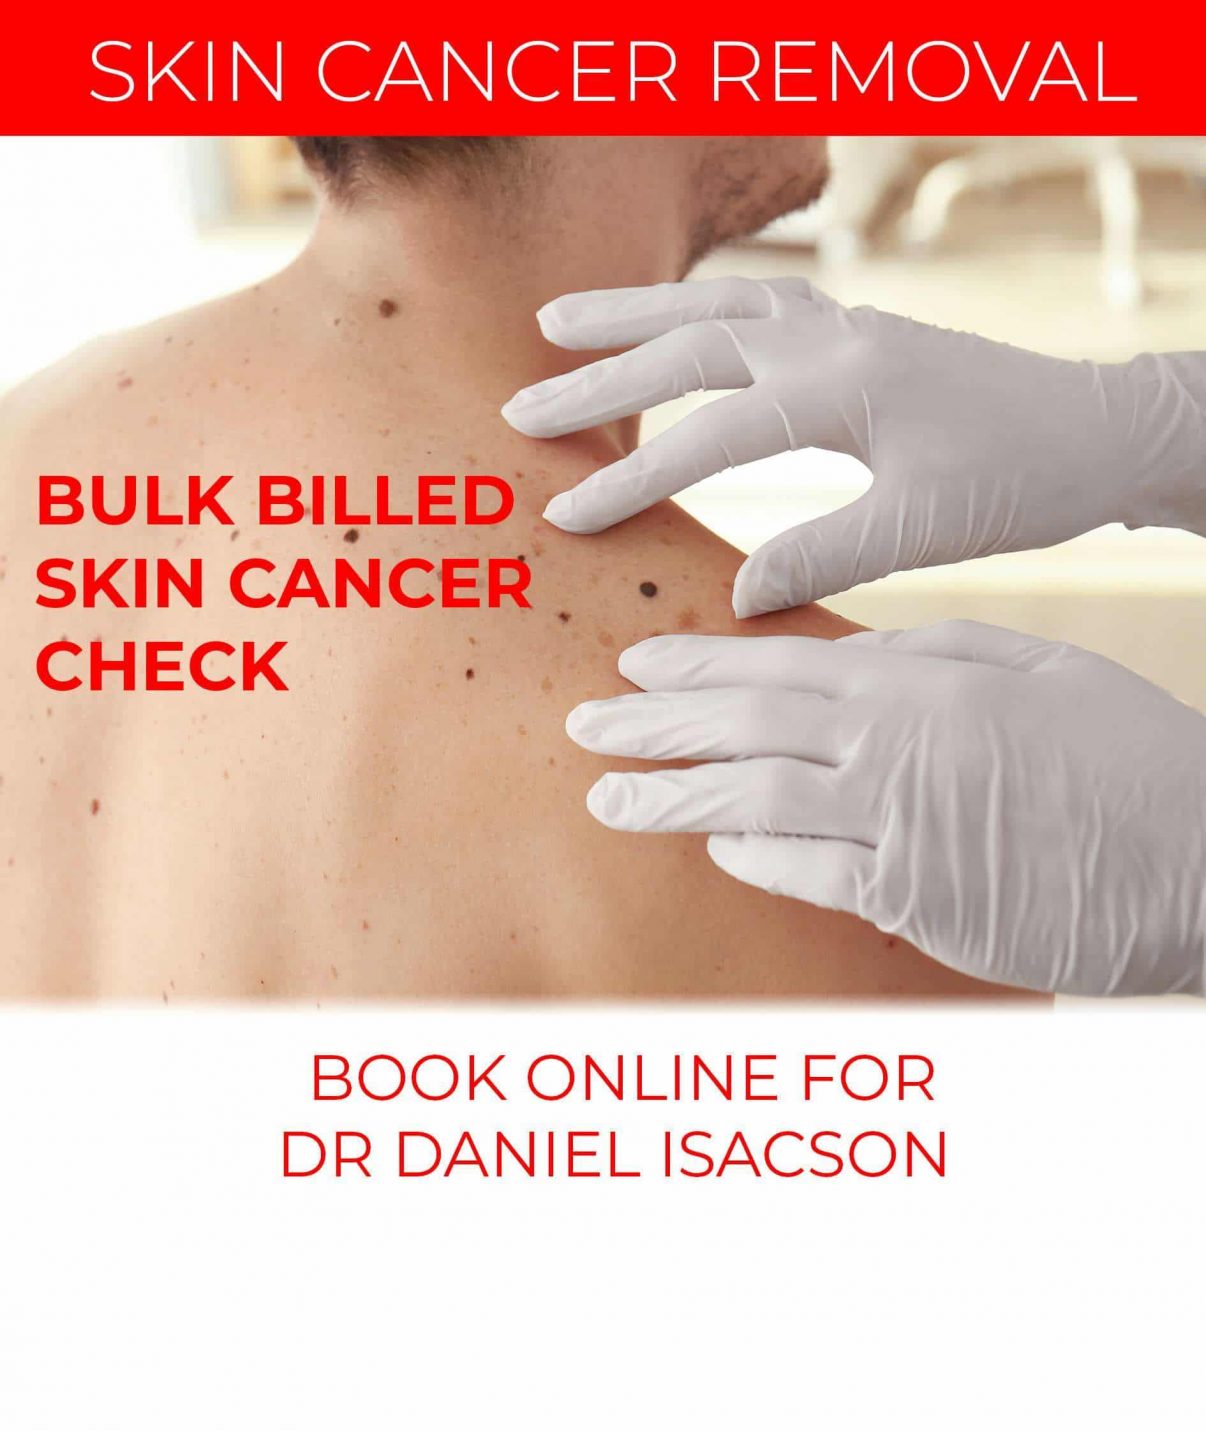 Bulk billed skin cancer removal at skin cancer clinic iin merrylands